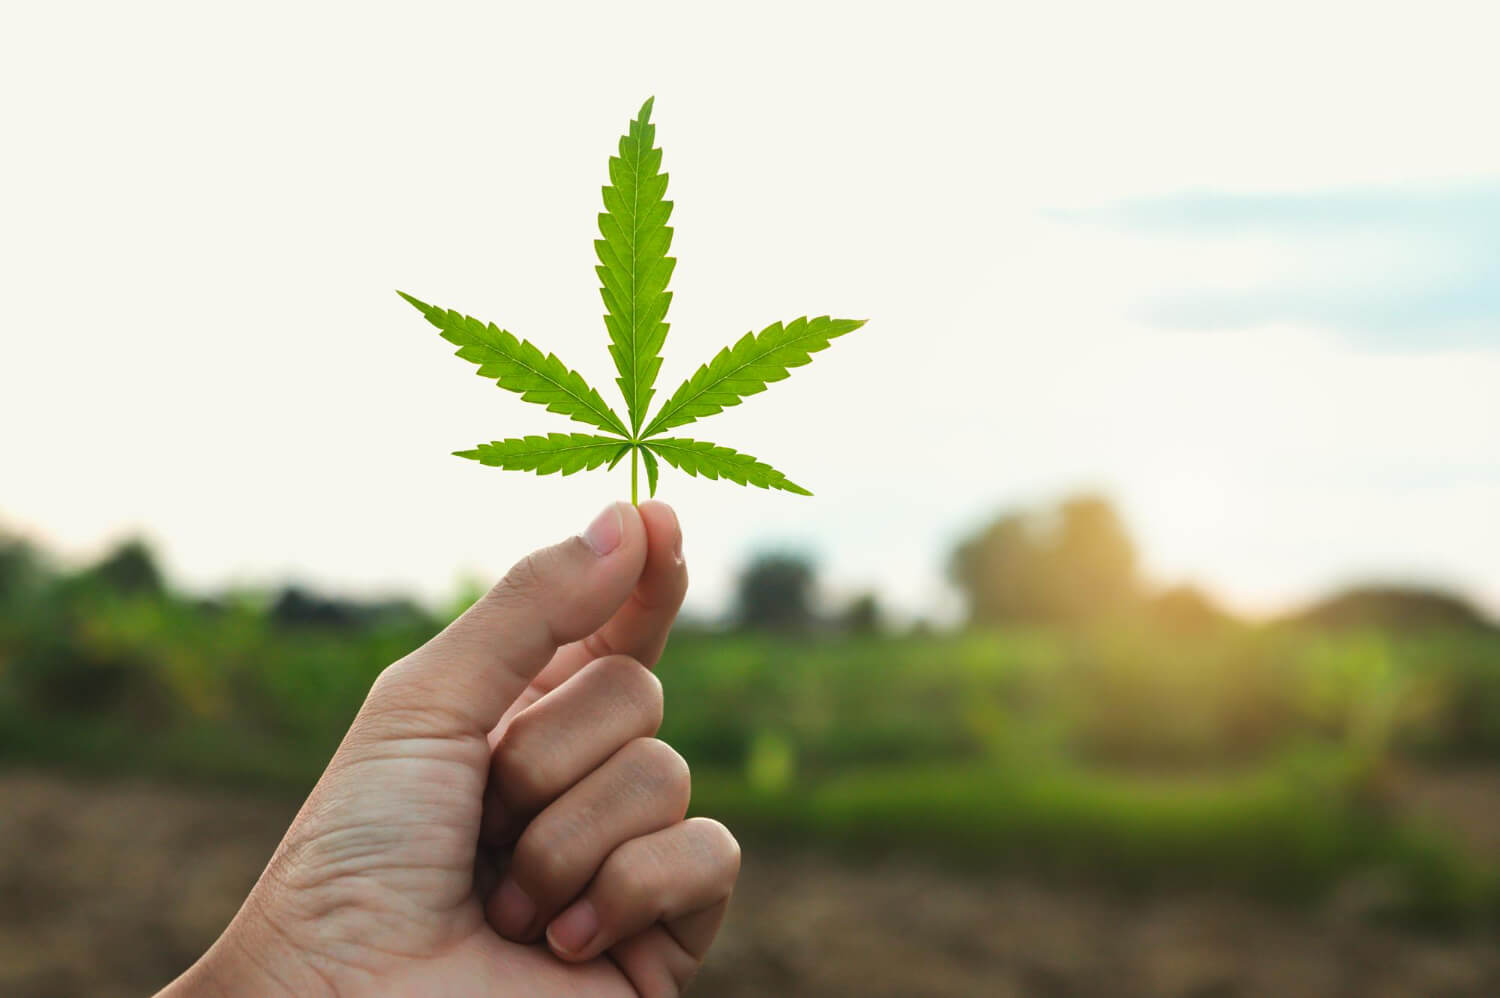 Ohio to vote on Issue 2 to legalize recreational marijuana